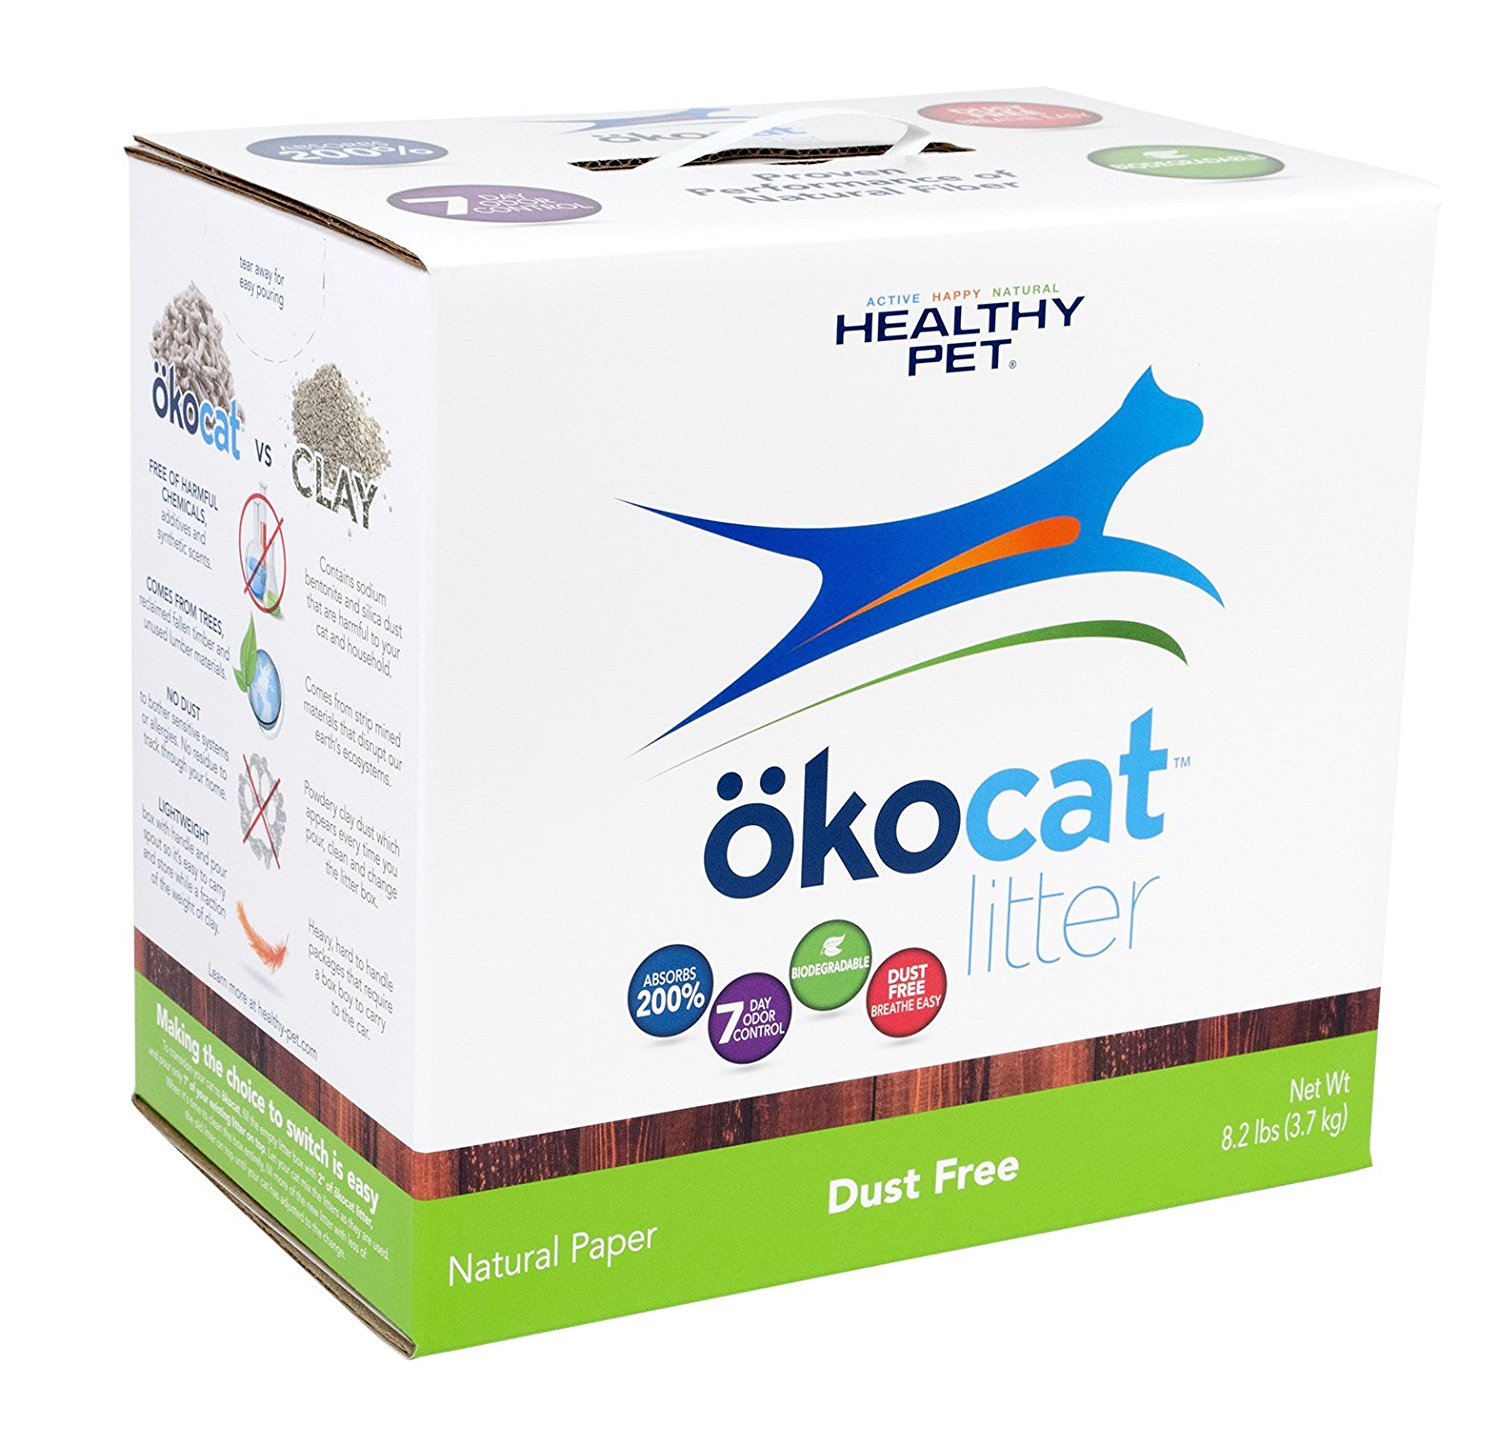 Okocat cat litter